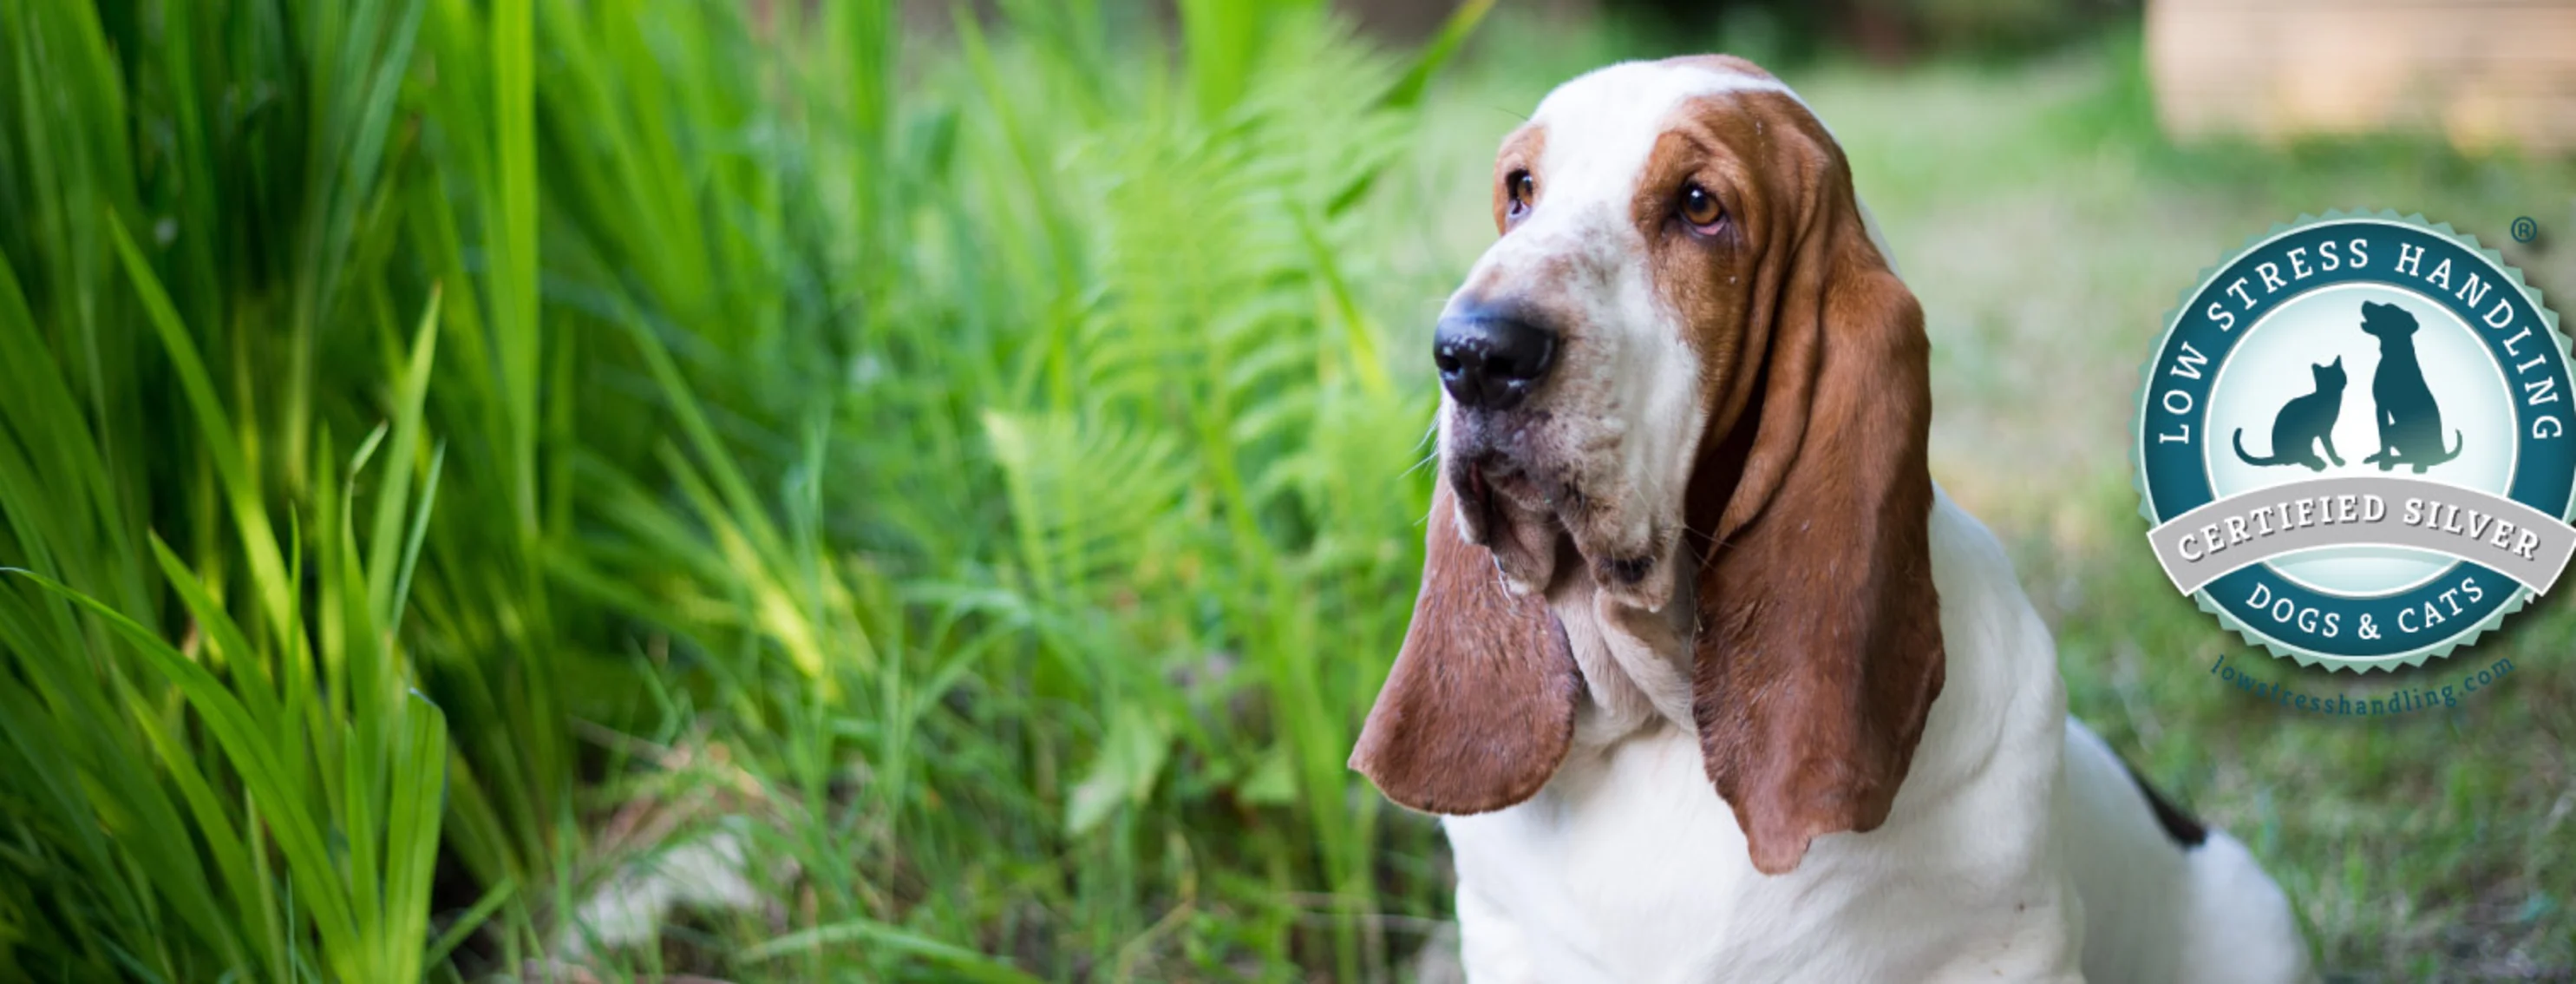 Basset hound with greenery